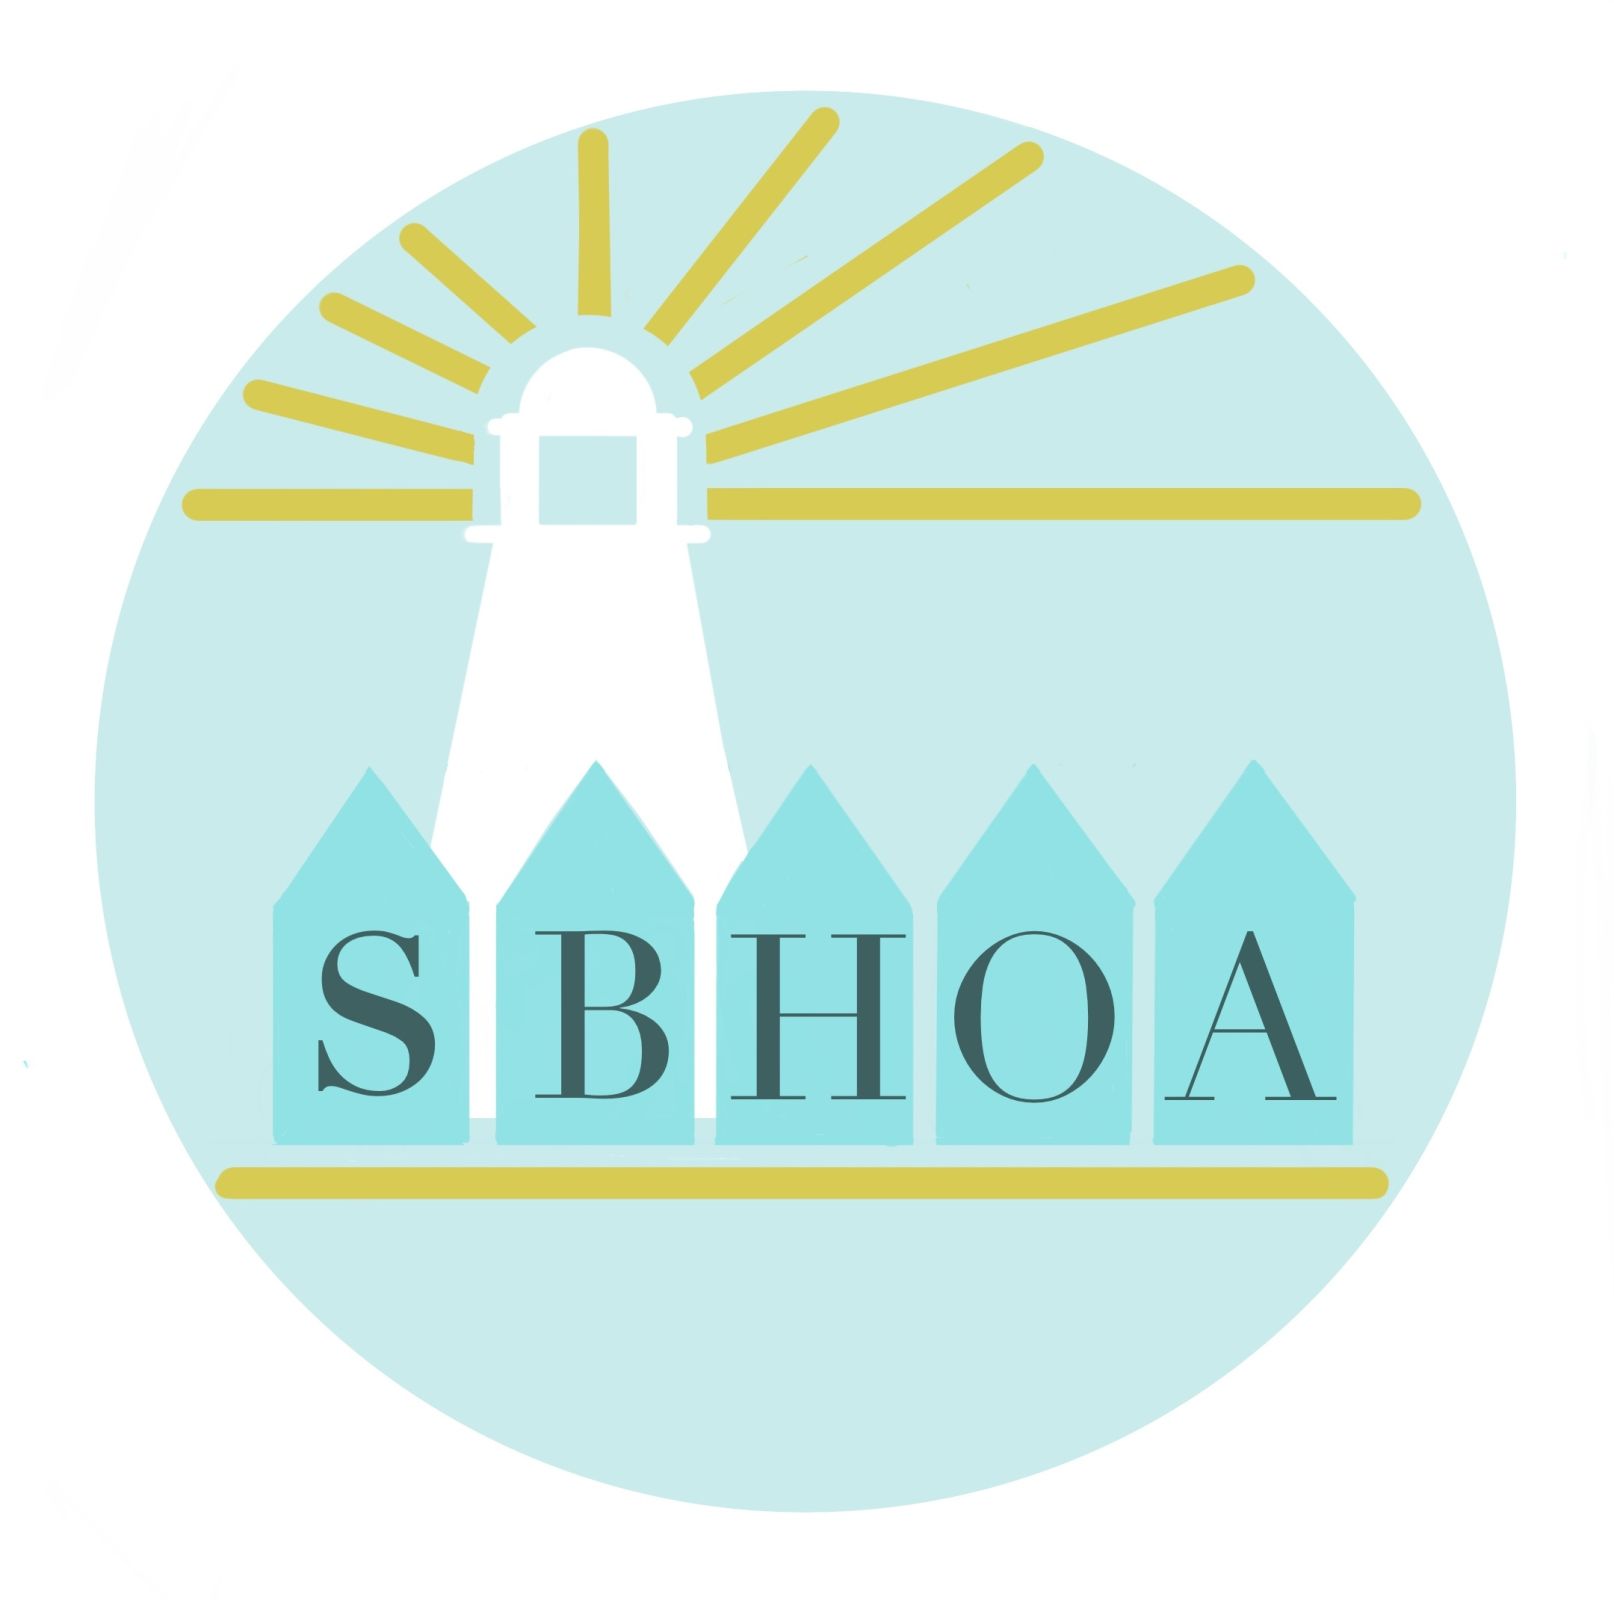 SBHOA Logo without description